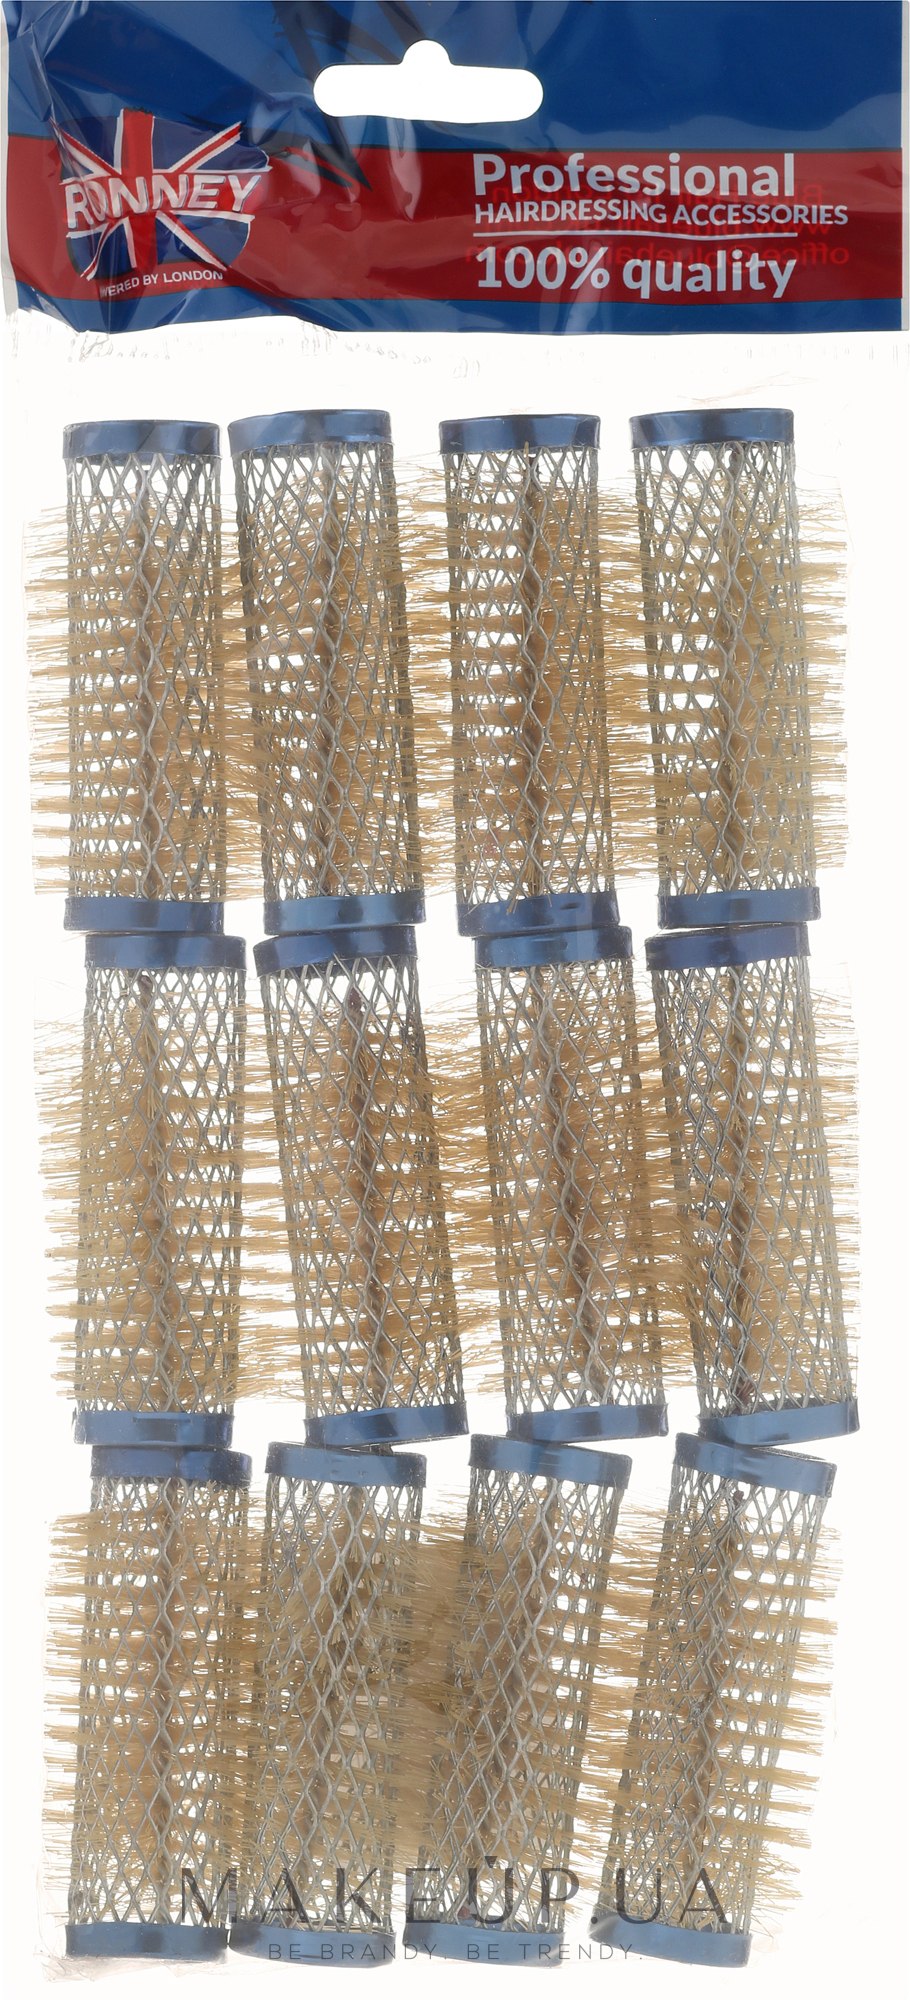 Бигуди 21/63 мм, синие - Ronney Professional Wire Curlers — фото 12шт